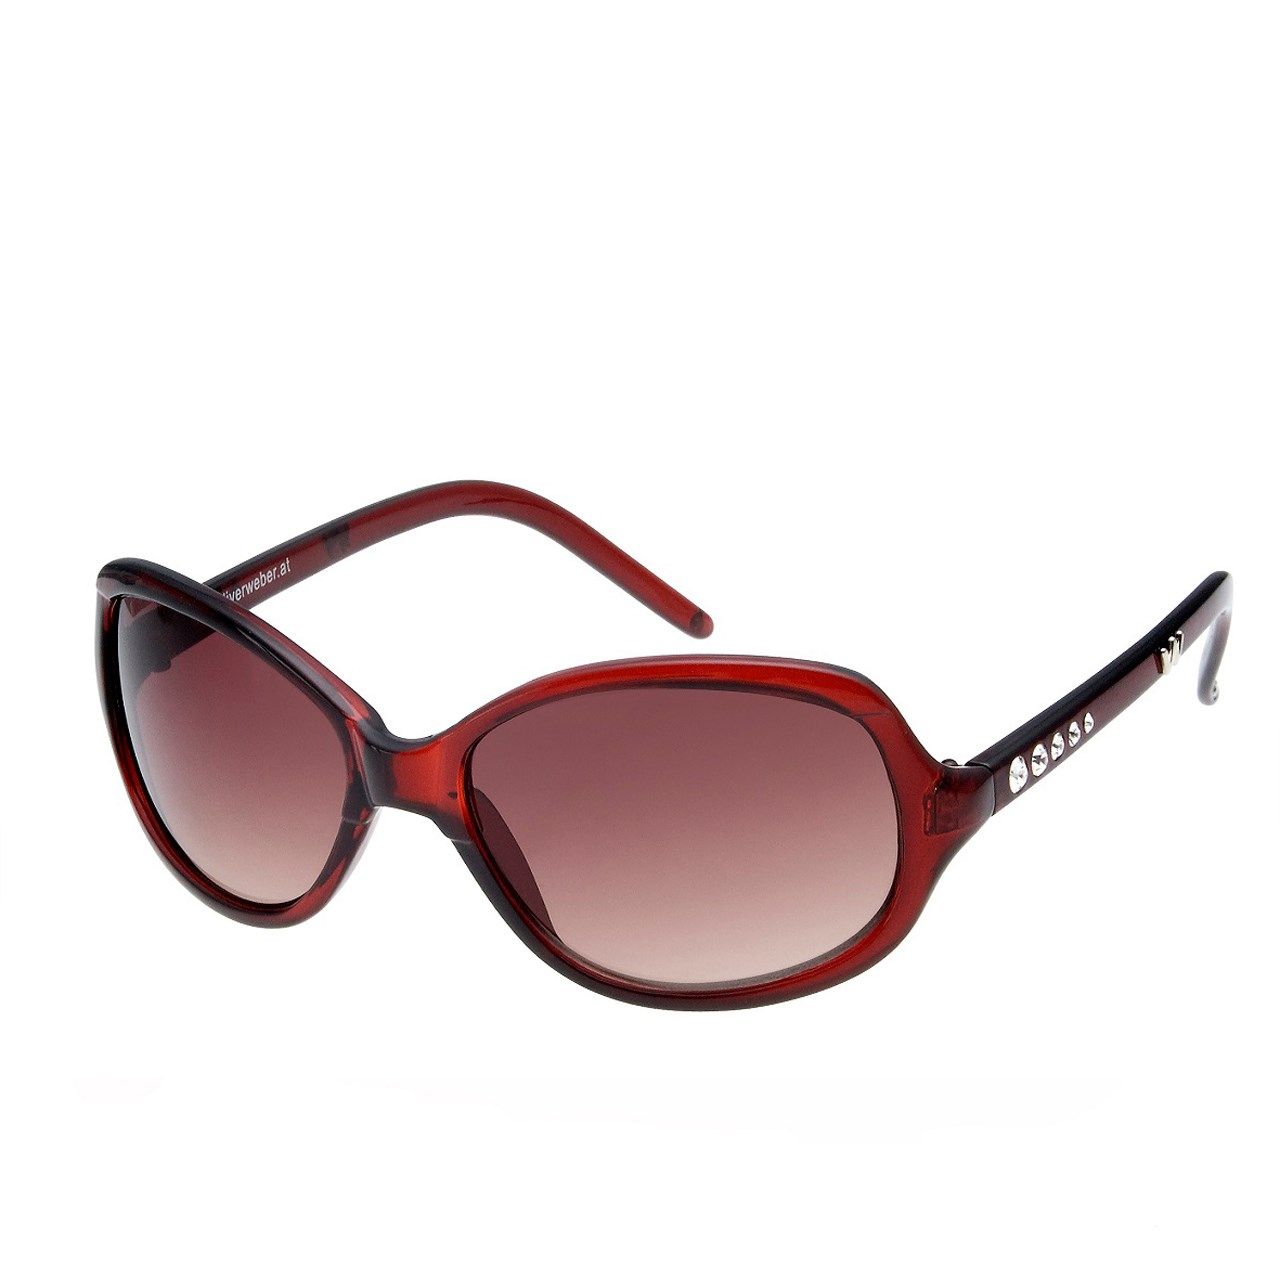 عینک آفتابی مدل ایداهو قرمز 75002 RED -  - 1